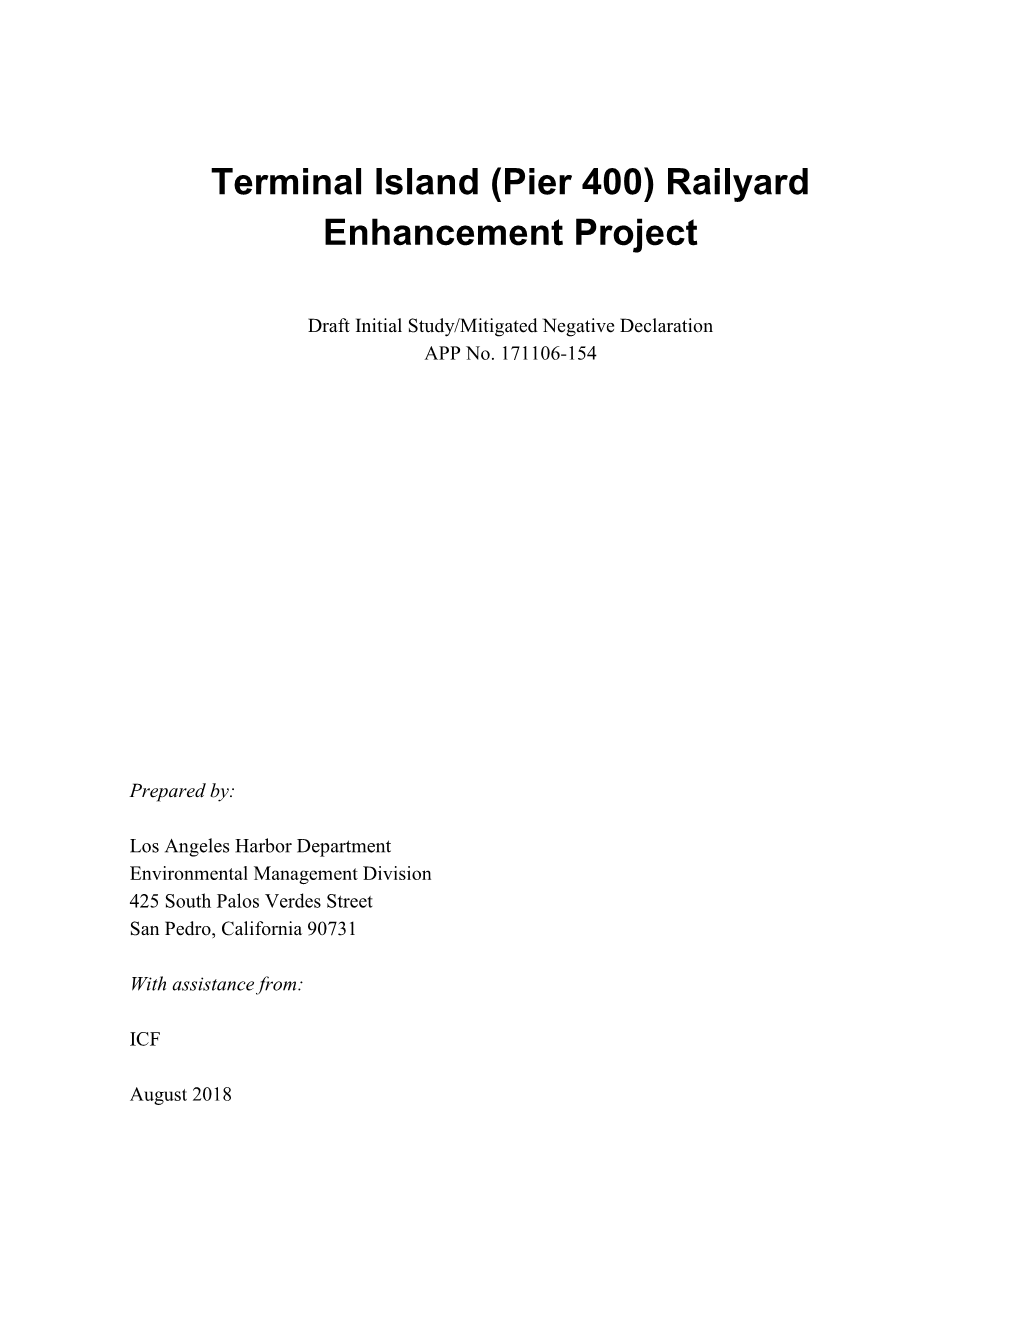 Terminal Island (Pier 400) Railyard Enhancement Project